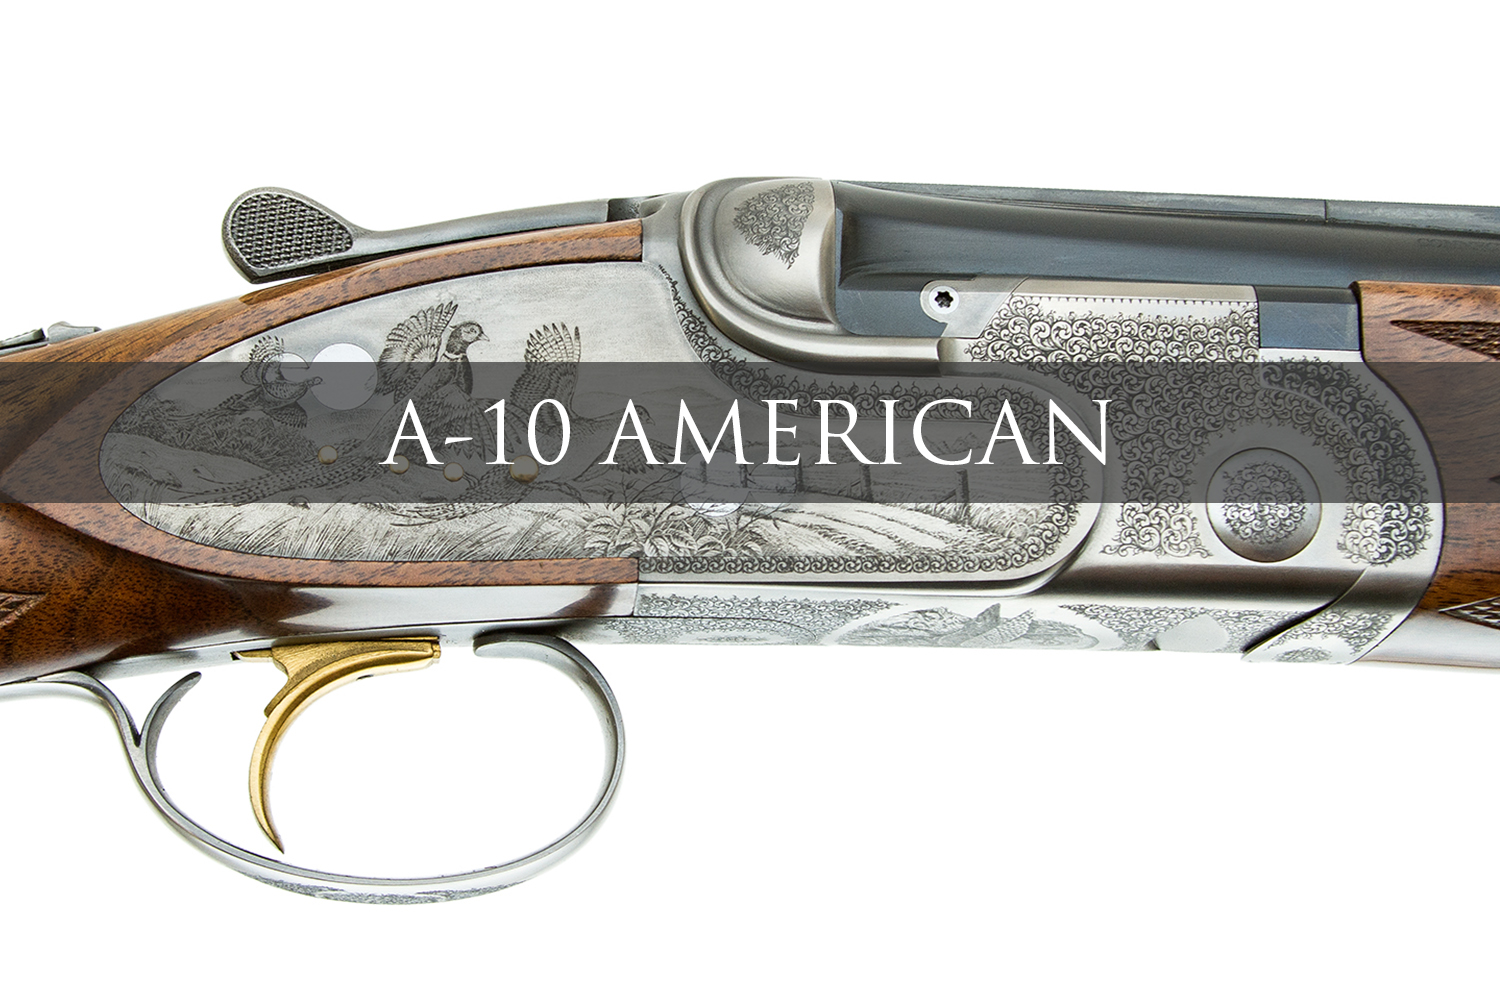 A10 AMERICAN BANNER.jpg